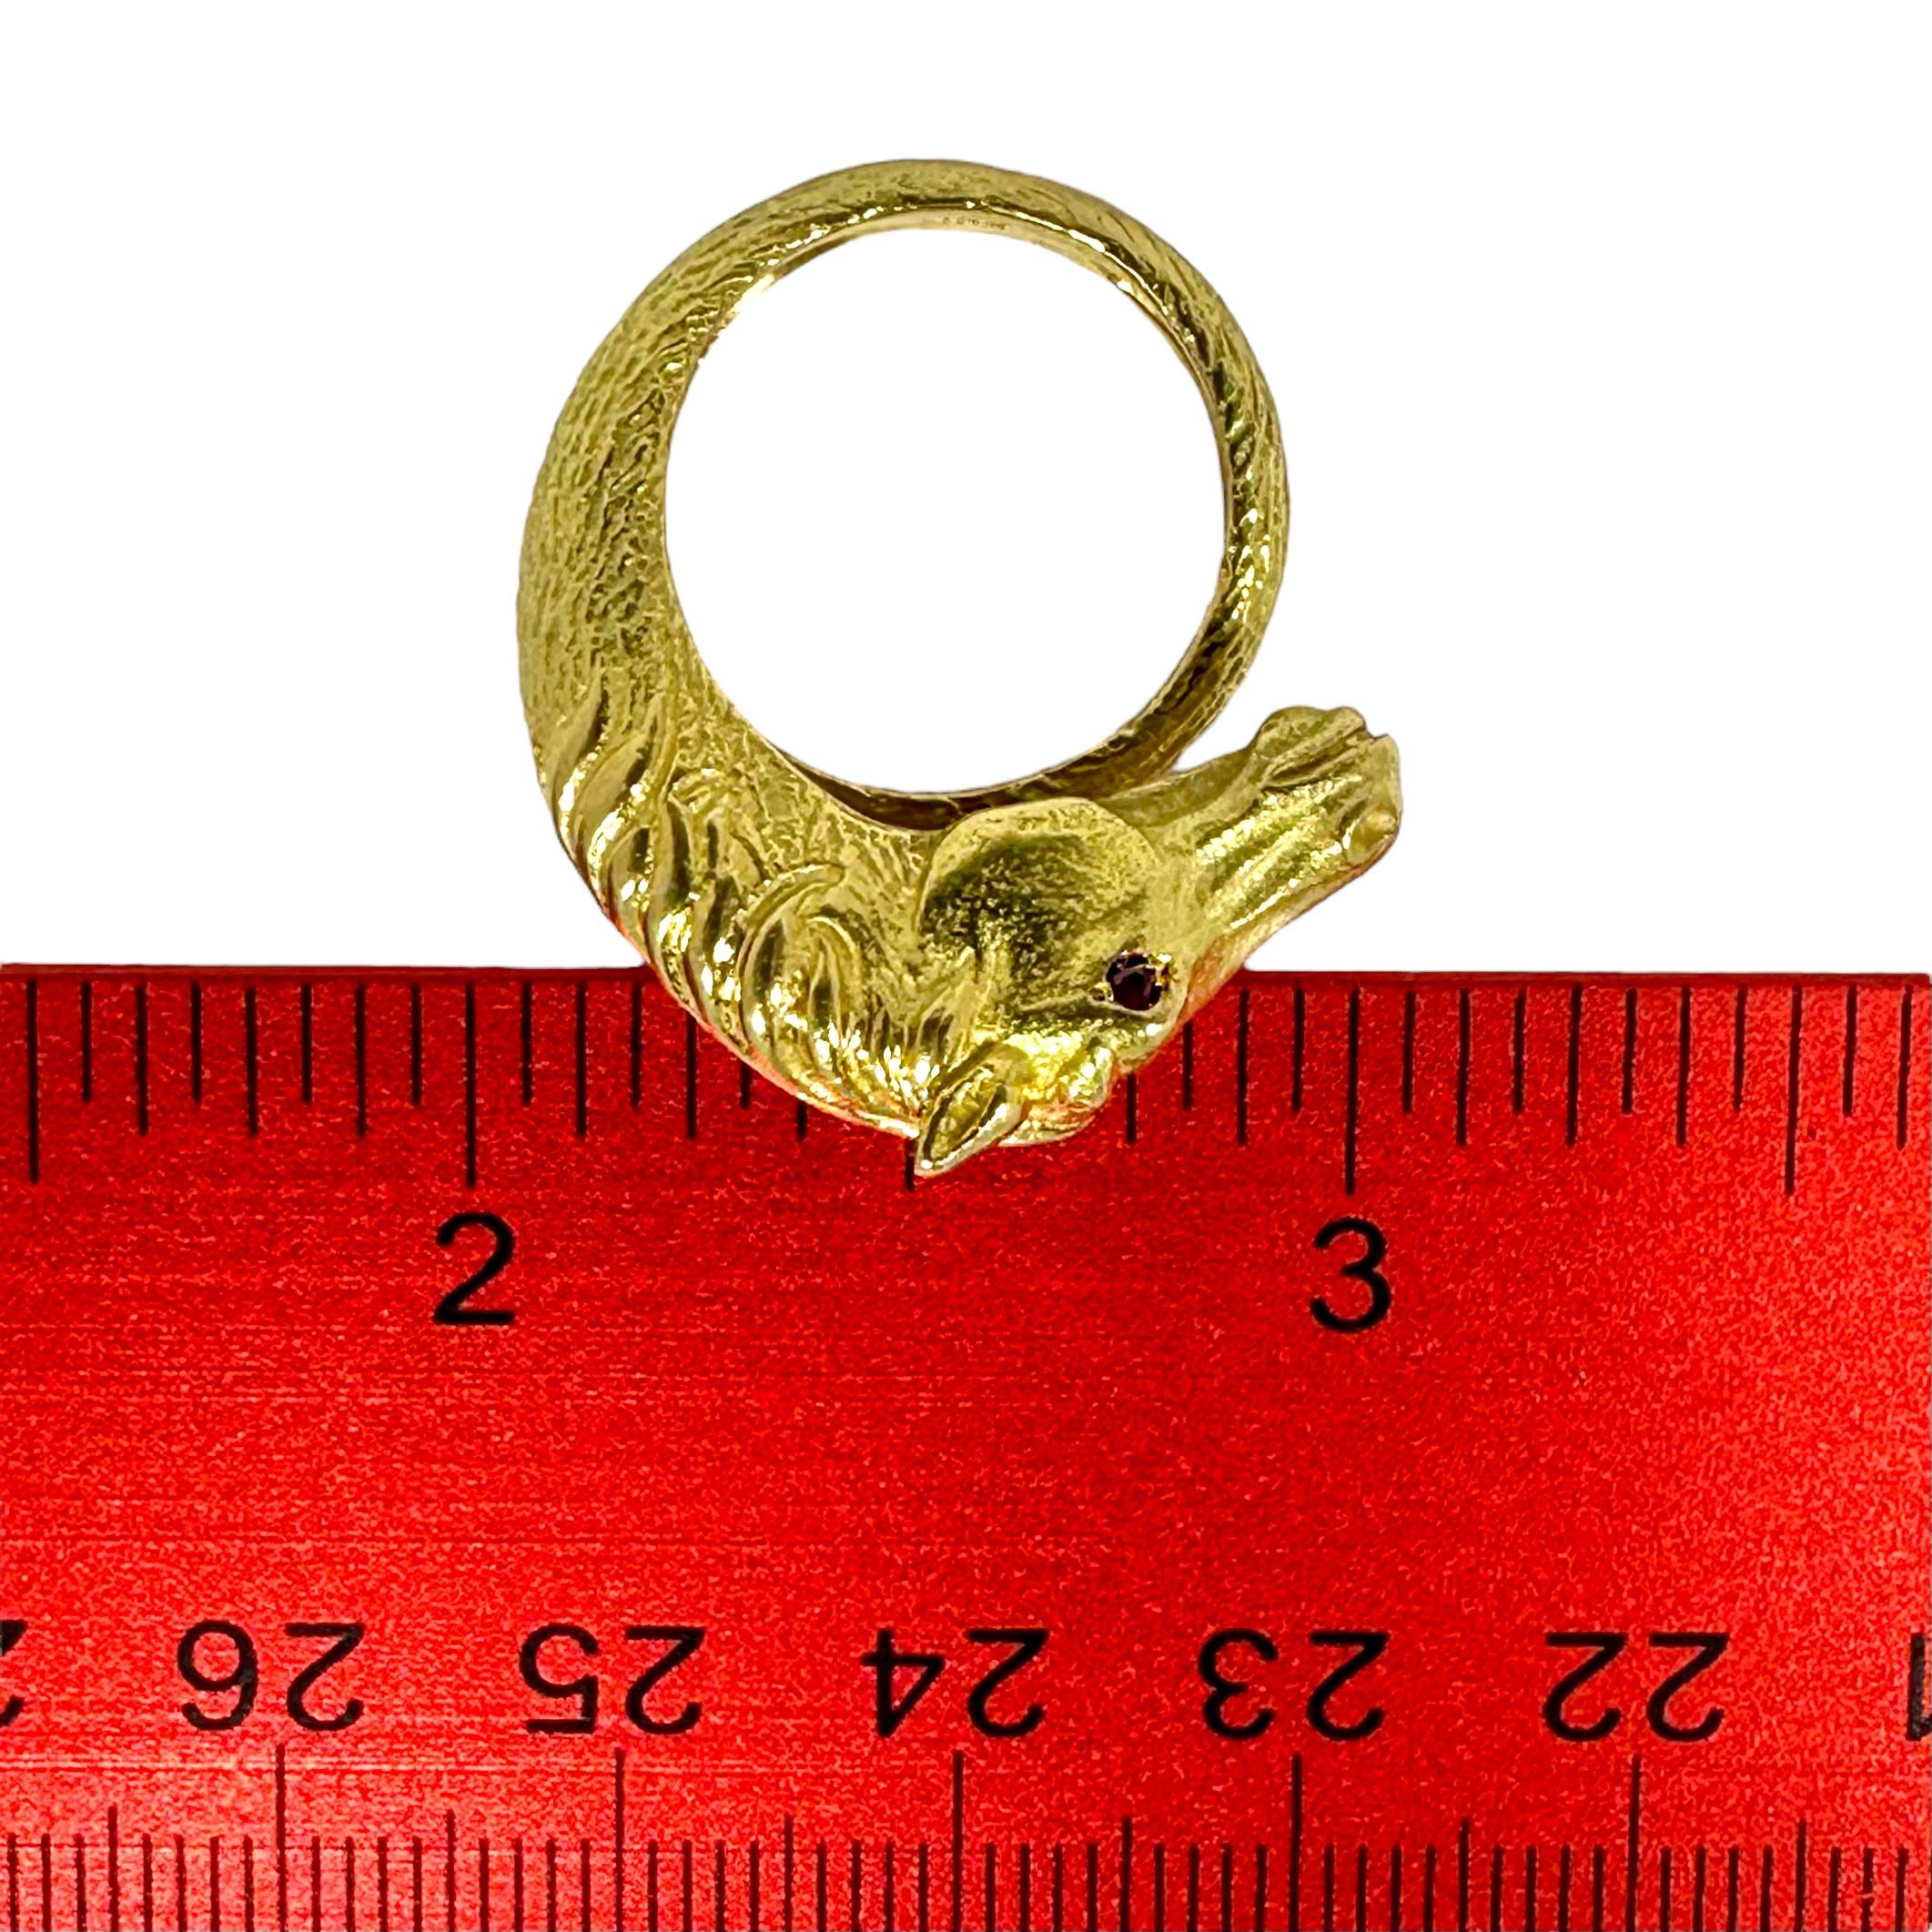  Lifelike Vintage George Lederman 18k Gold Equestrian Ring with Ruby Eyes For Sale 1